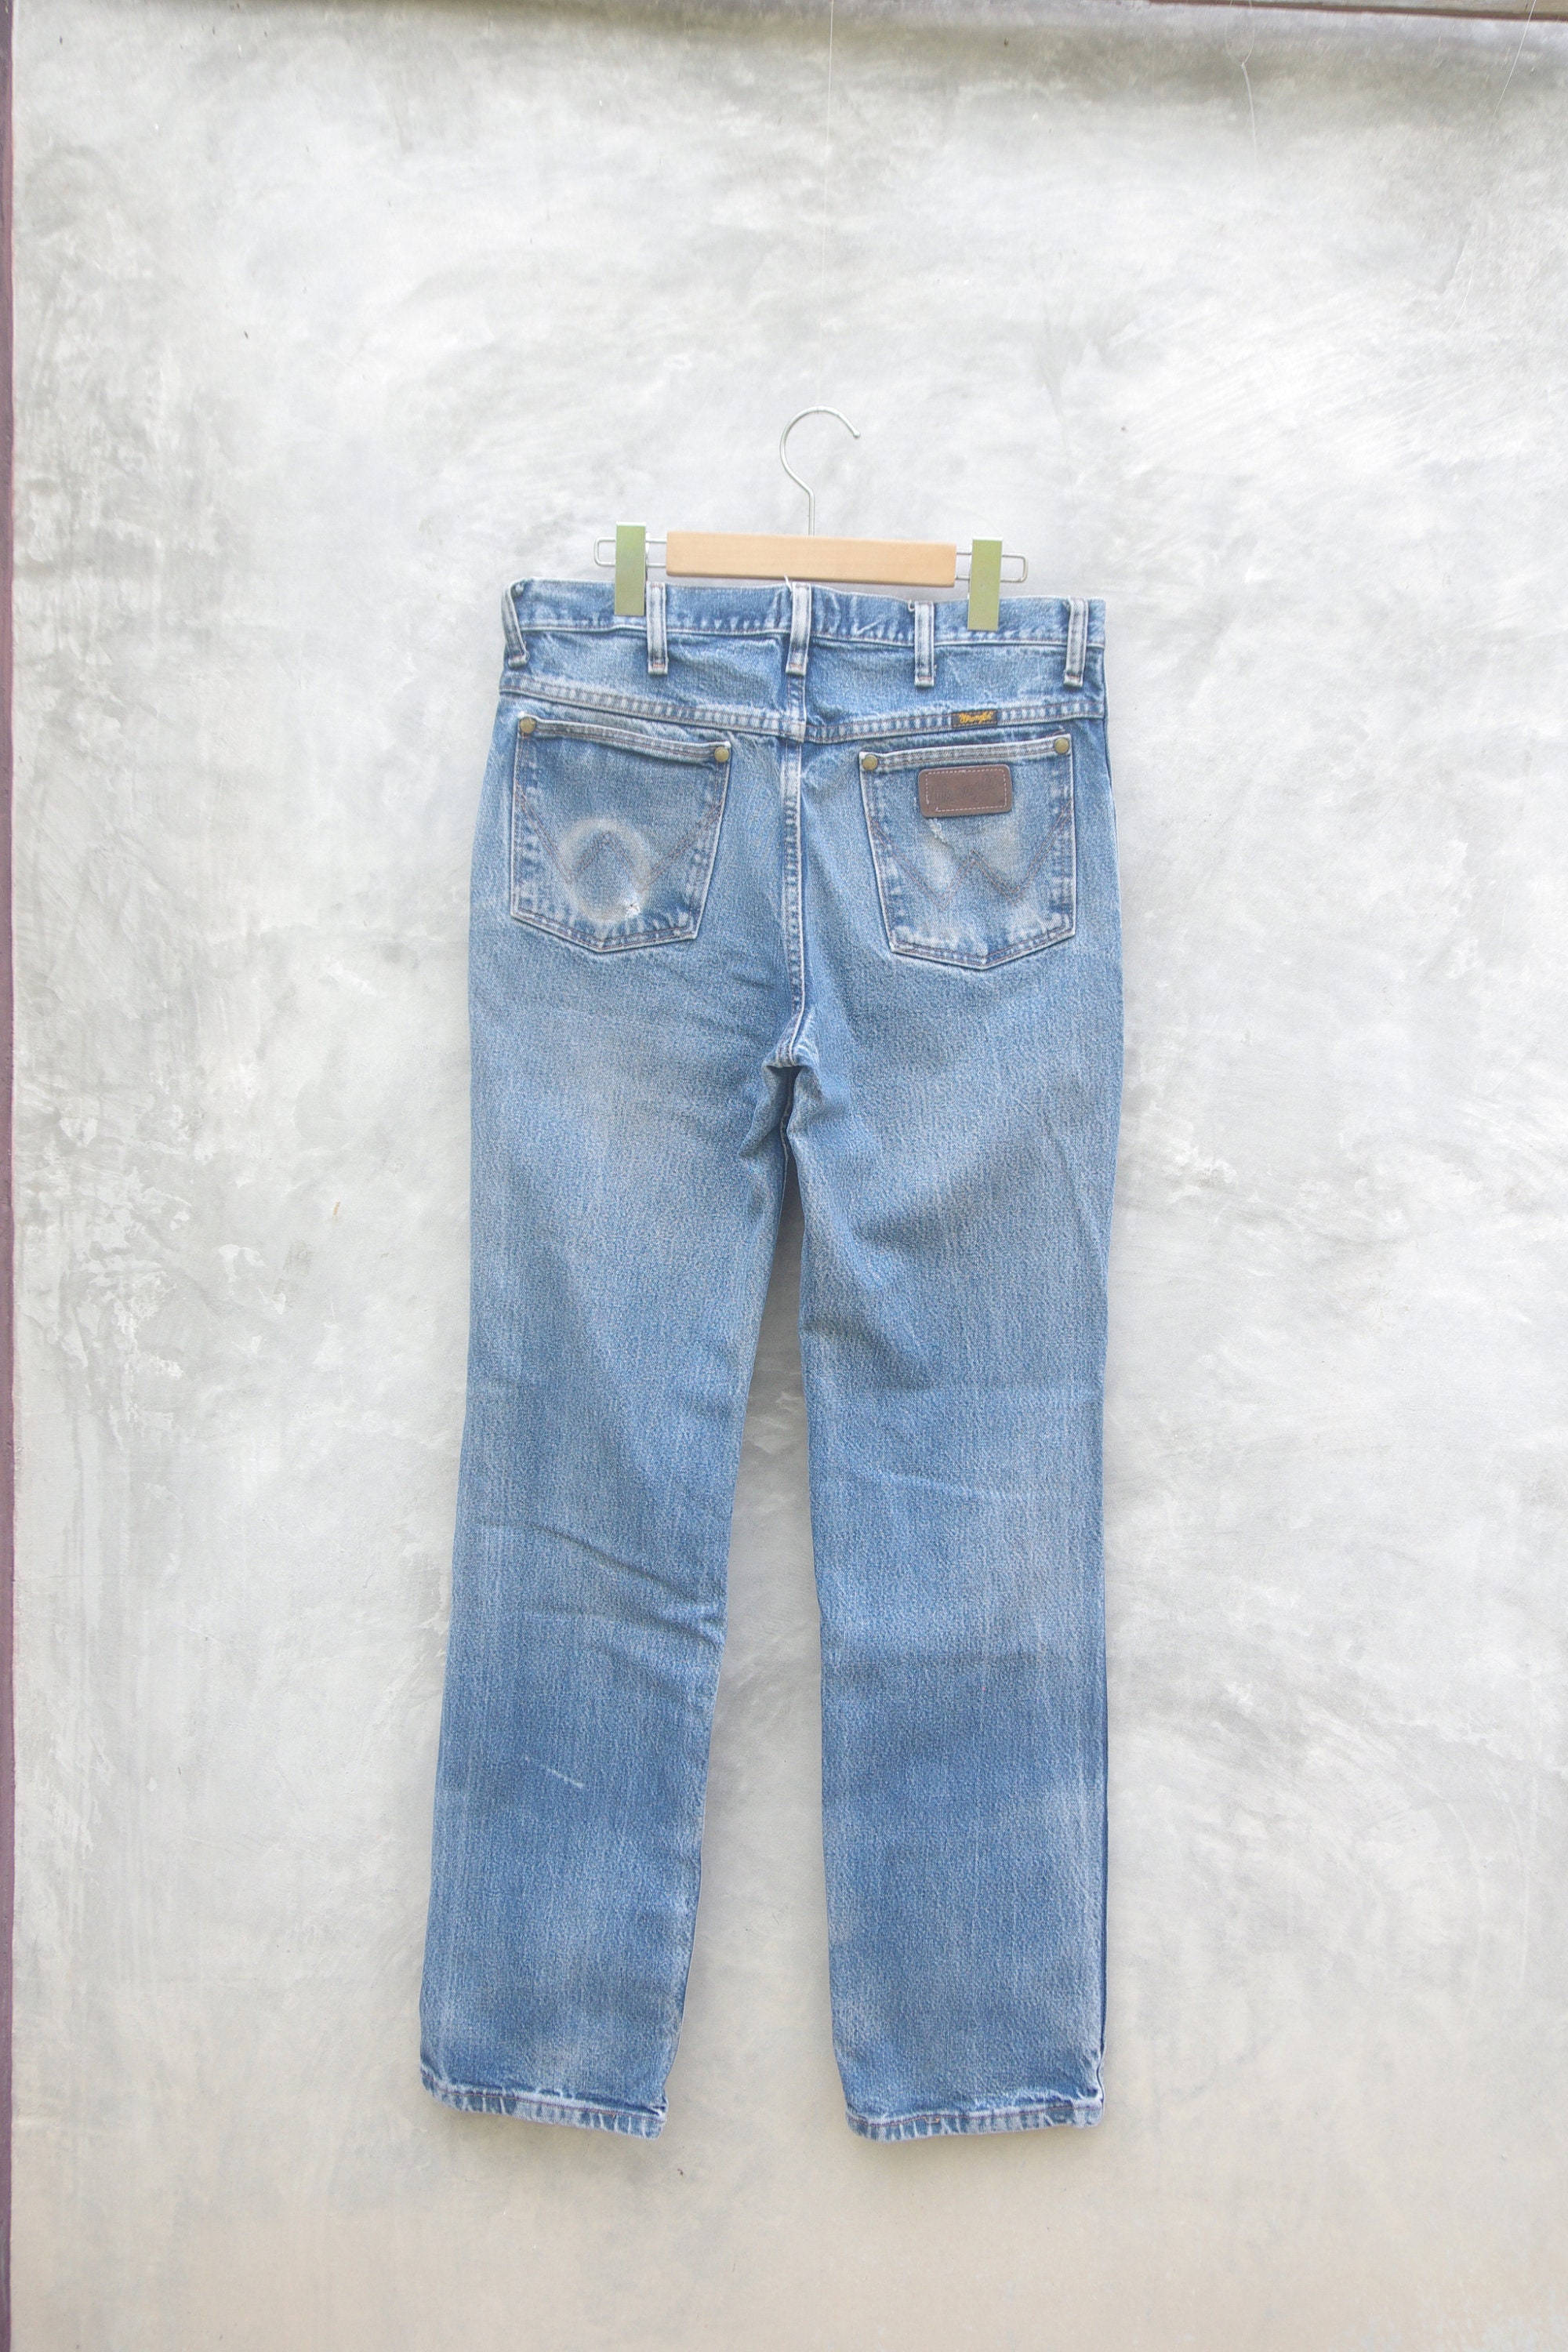 Faded Jeans Vintage Wrangler Blue Jeans W31 W32cool Jeans - Etsy